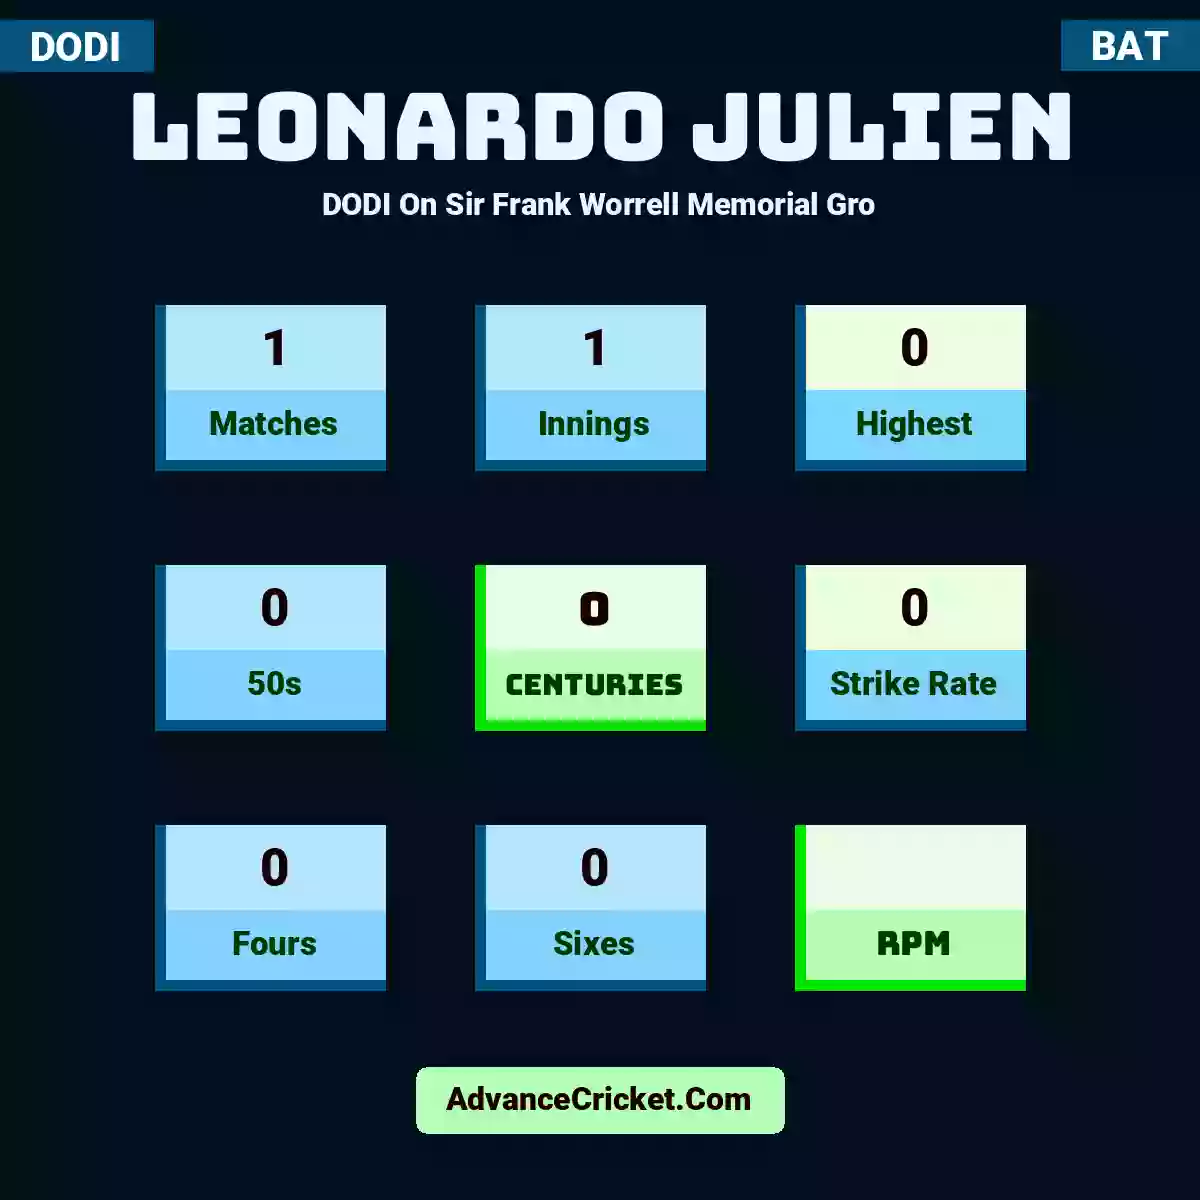 Leonardo Julien DODI  On Sir Frank Worrell Memorial Gro, Leonardo Julien played 1 matches, scored 0 runs as highest, 0 half-centuries, and 0 centuries, with a strike rate of 0. L.Julien hit 0 fours and 0 sixes.